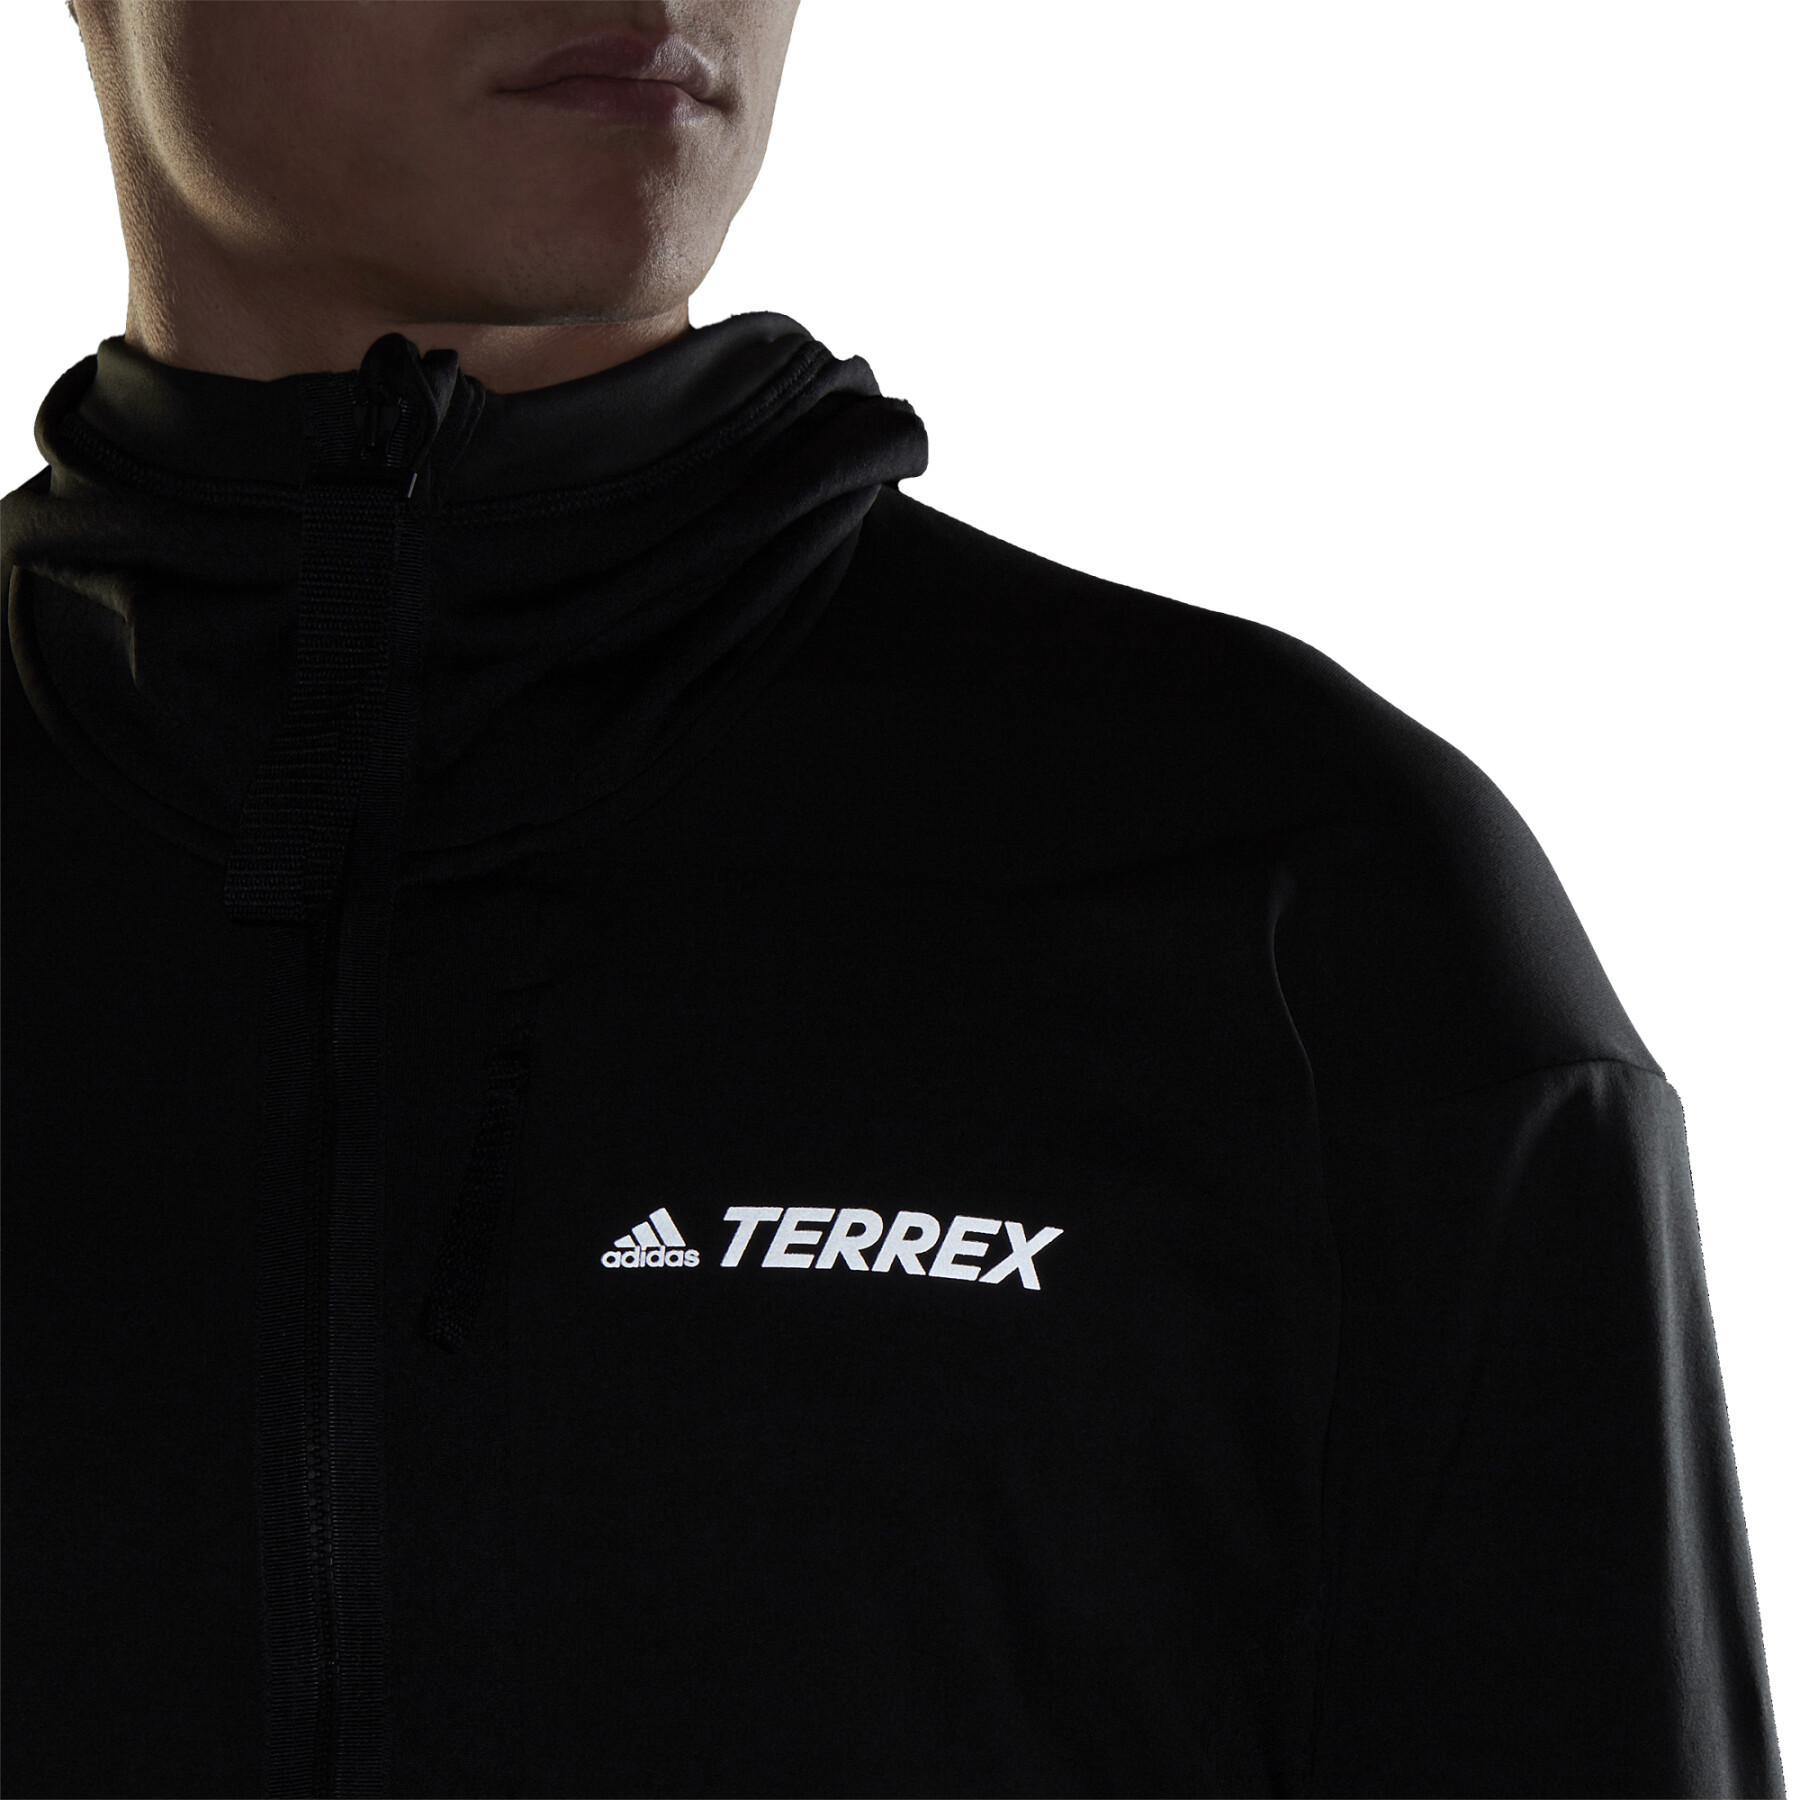 Veste adidas Terrex Tech Flooce Ed Fleece